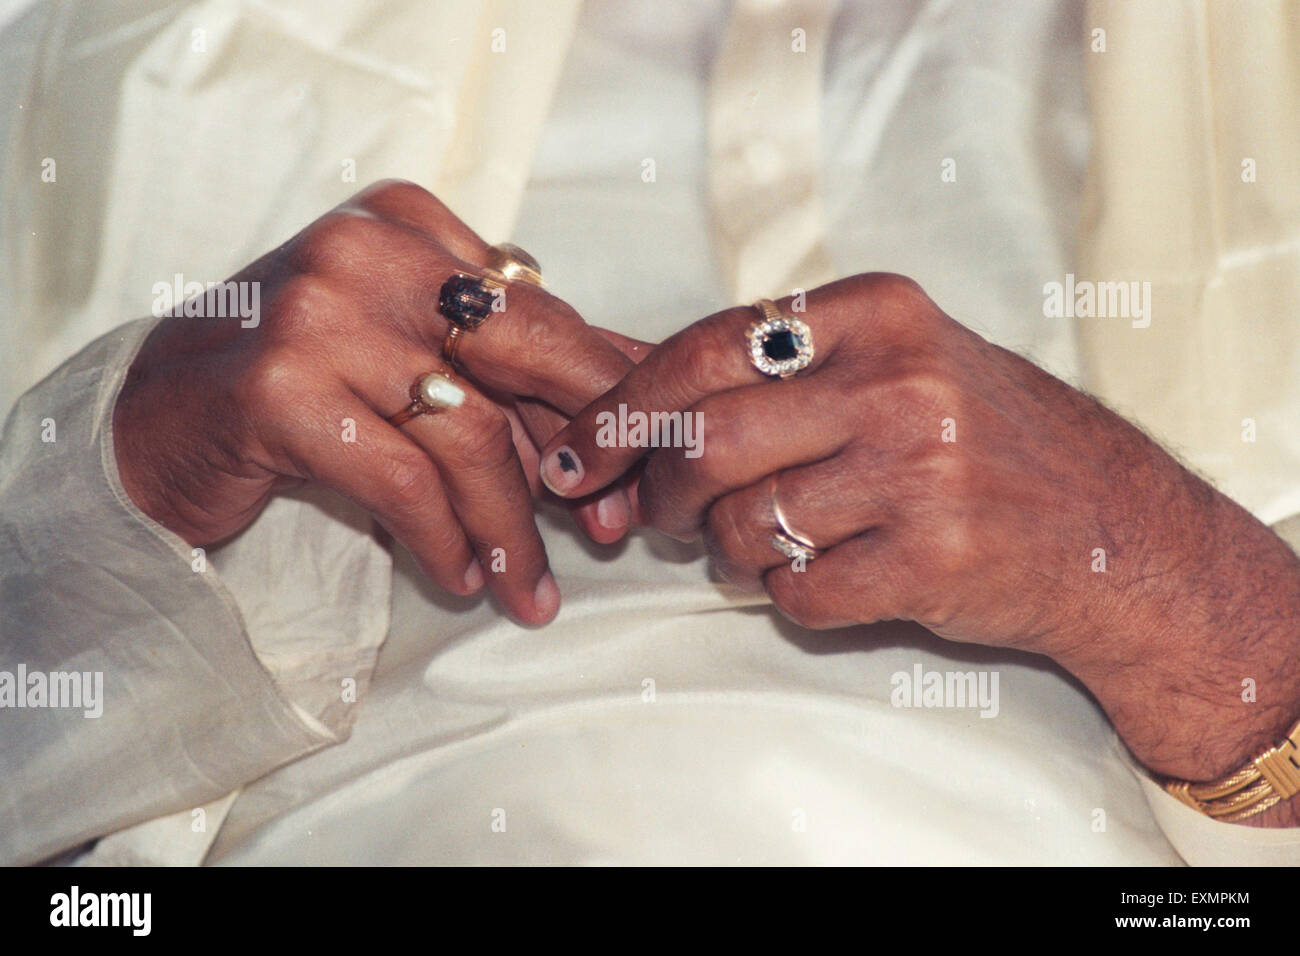 Indian filmmaker politician N. T. Rama Rao hands wearing rings in many fingers Stock Photo